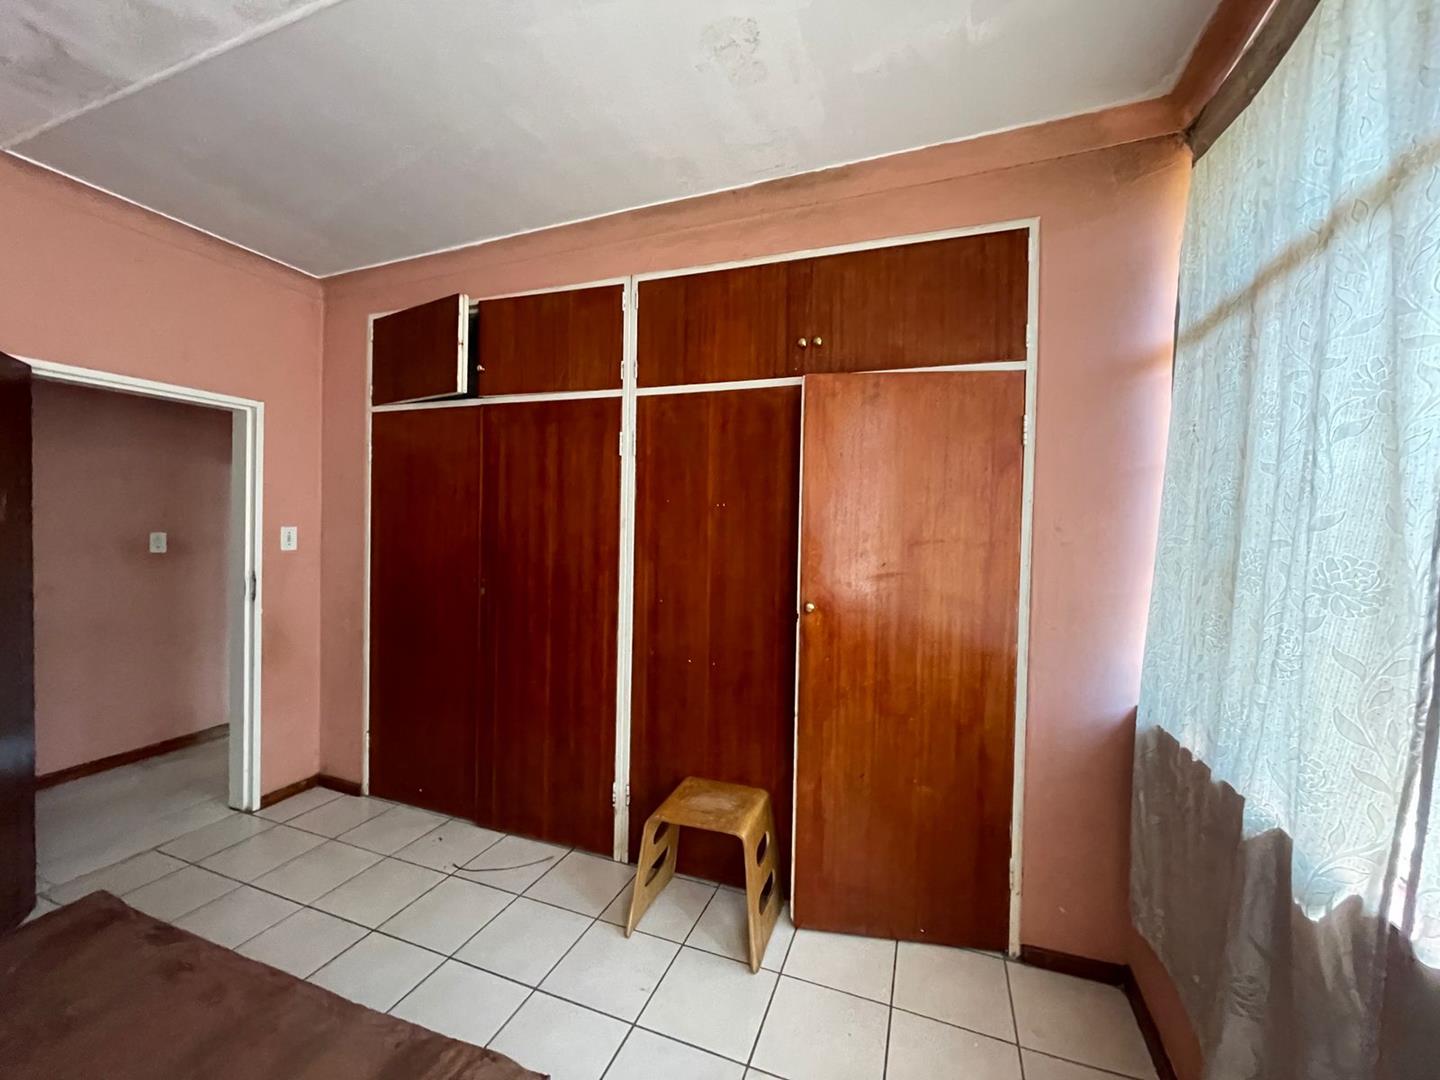 3 Bedroom Property for Sale in Monument Park Gauteng